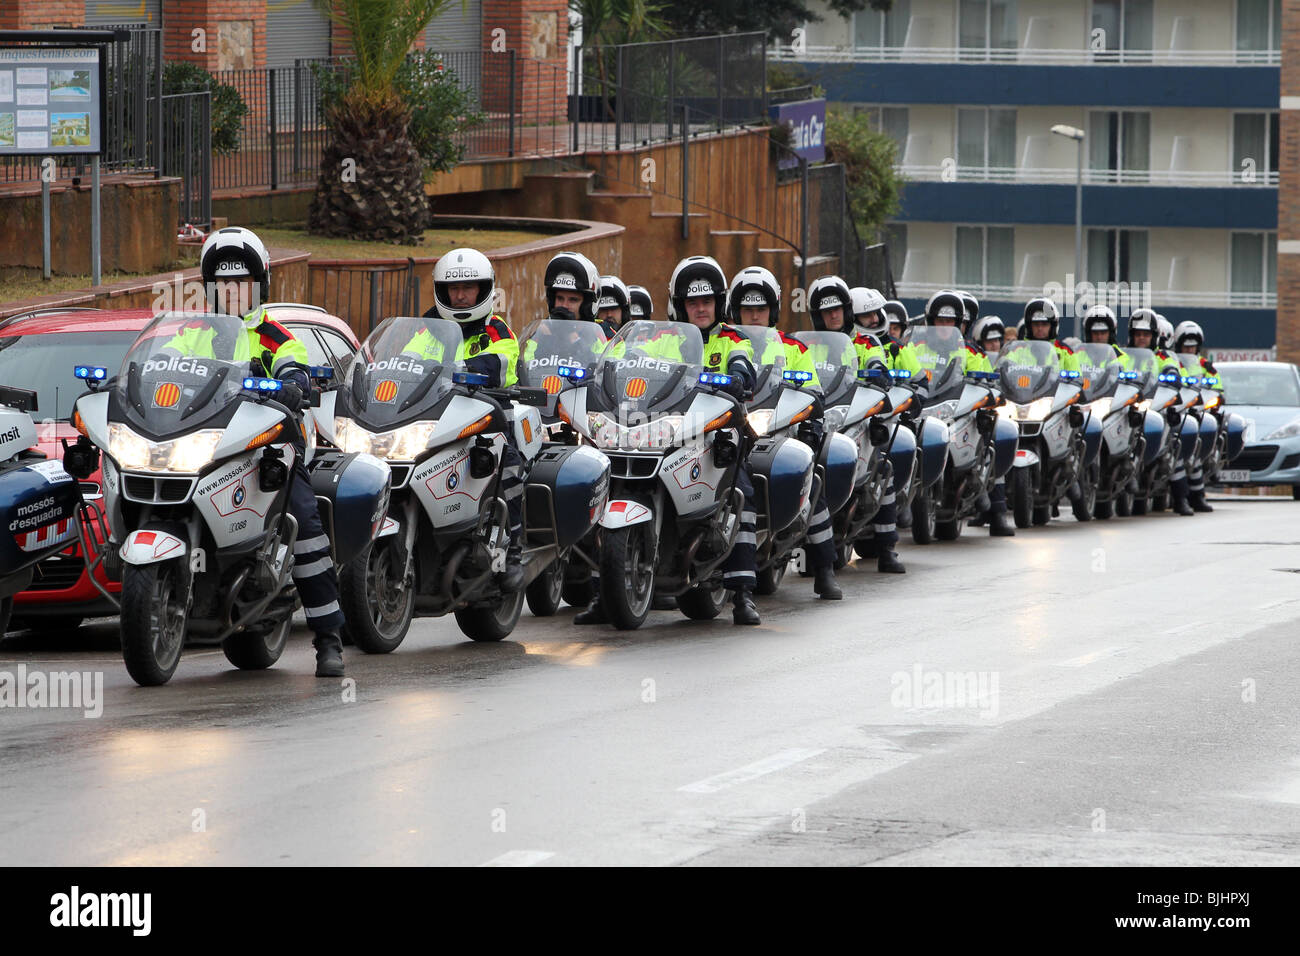 Katalanische Polizei-Motorradfahrer, Mossos Notfälle, patrouillieren Stadtstraßen in Lloret de Mar, Katalonien, Spanien Stockfoto